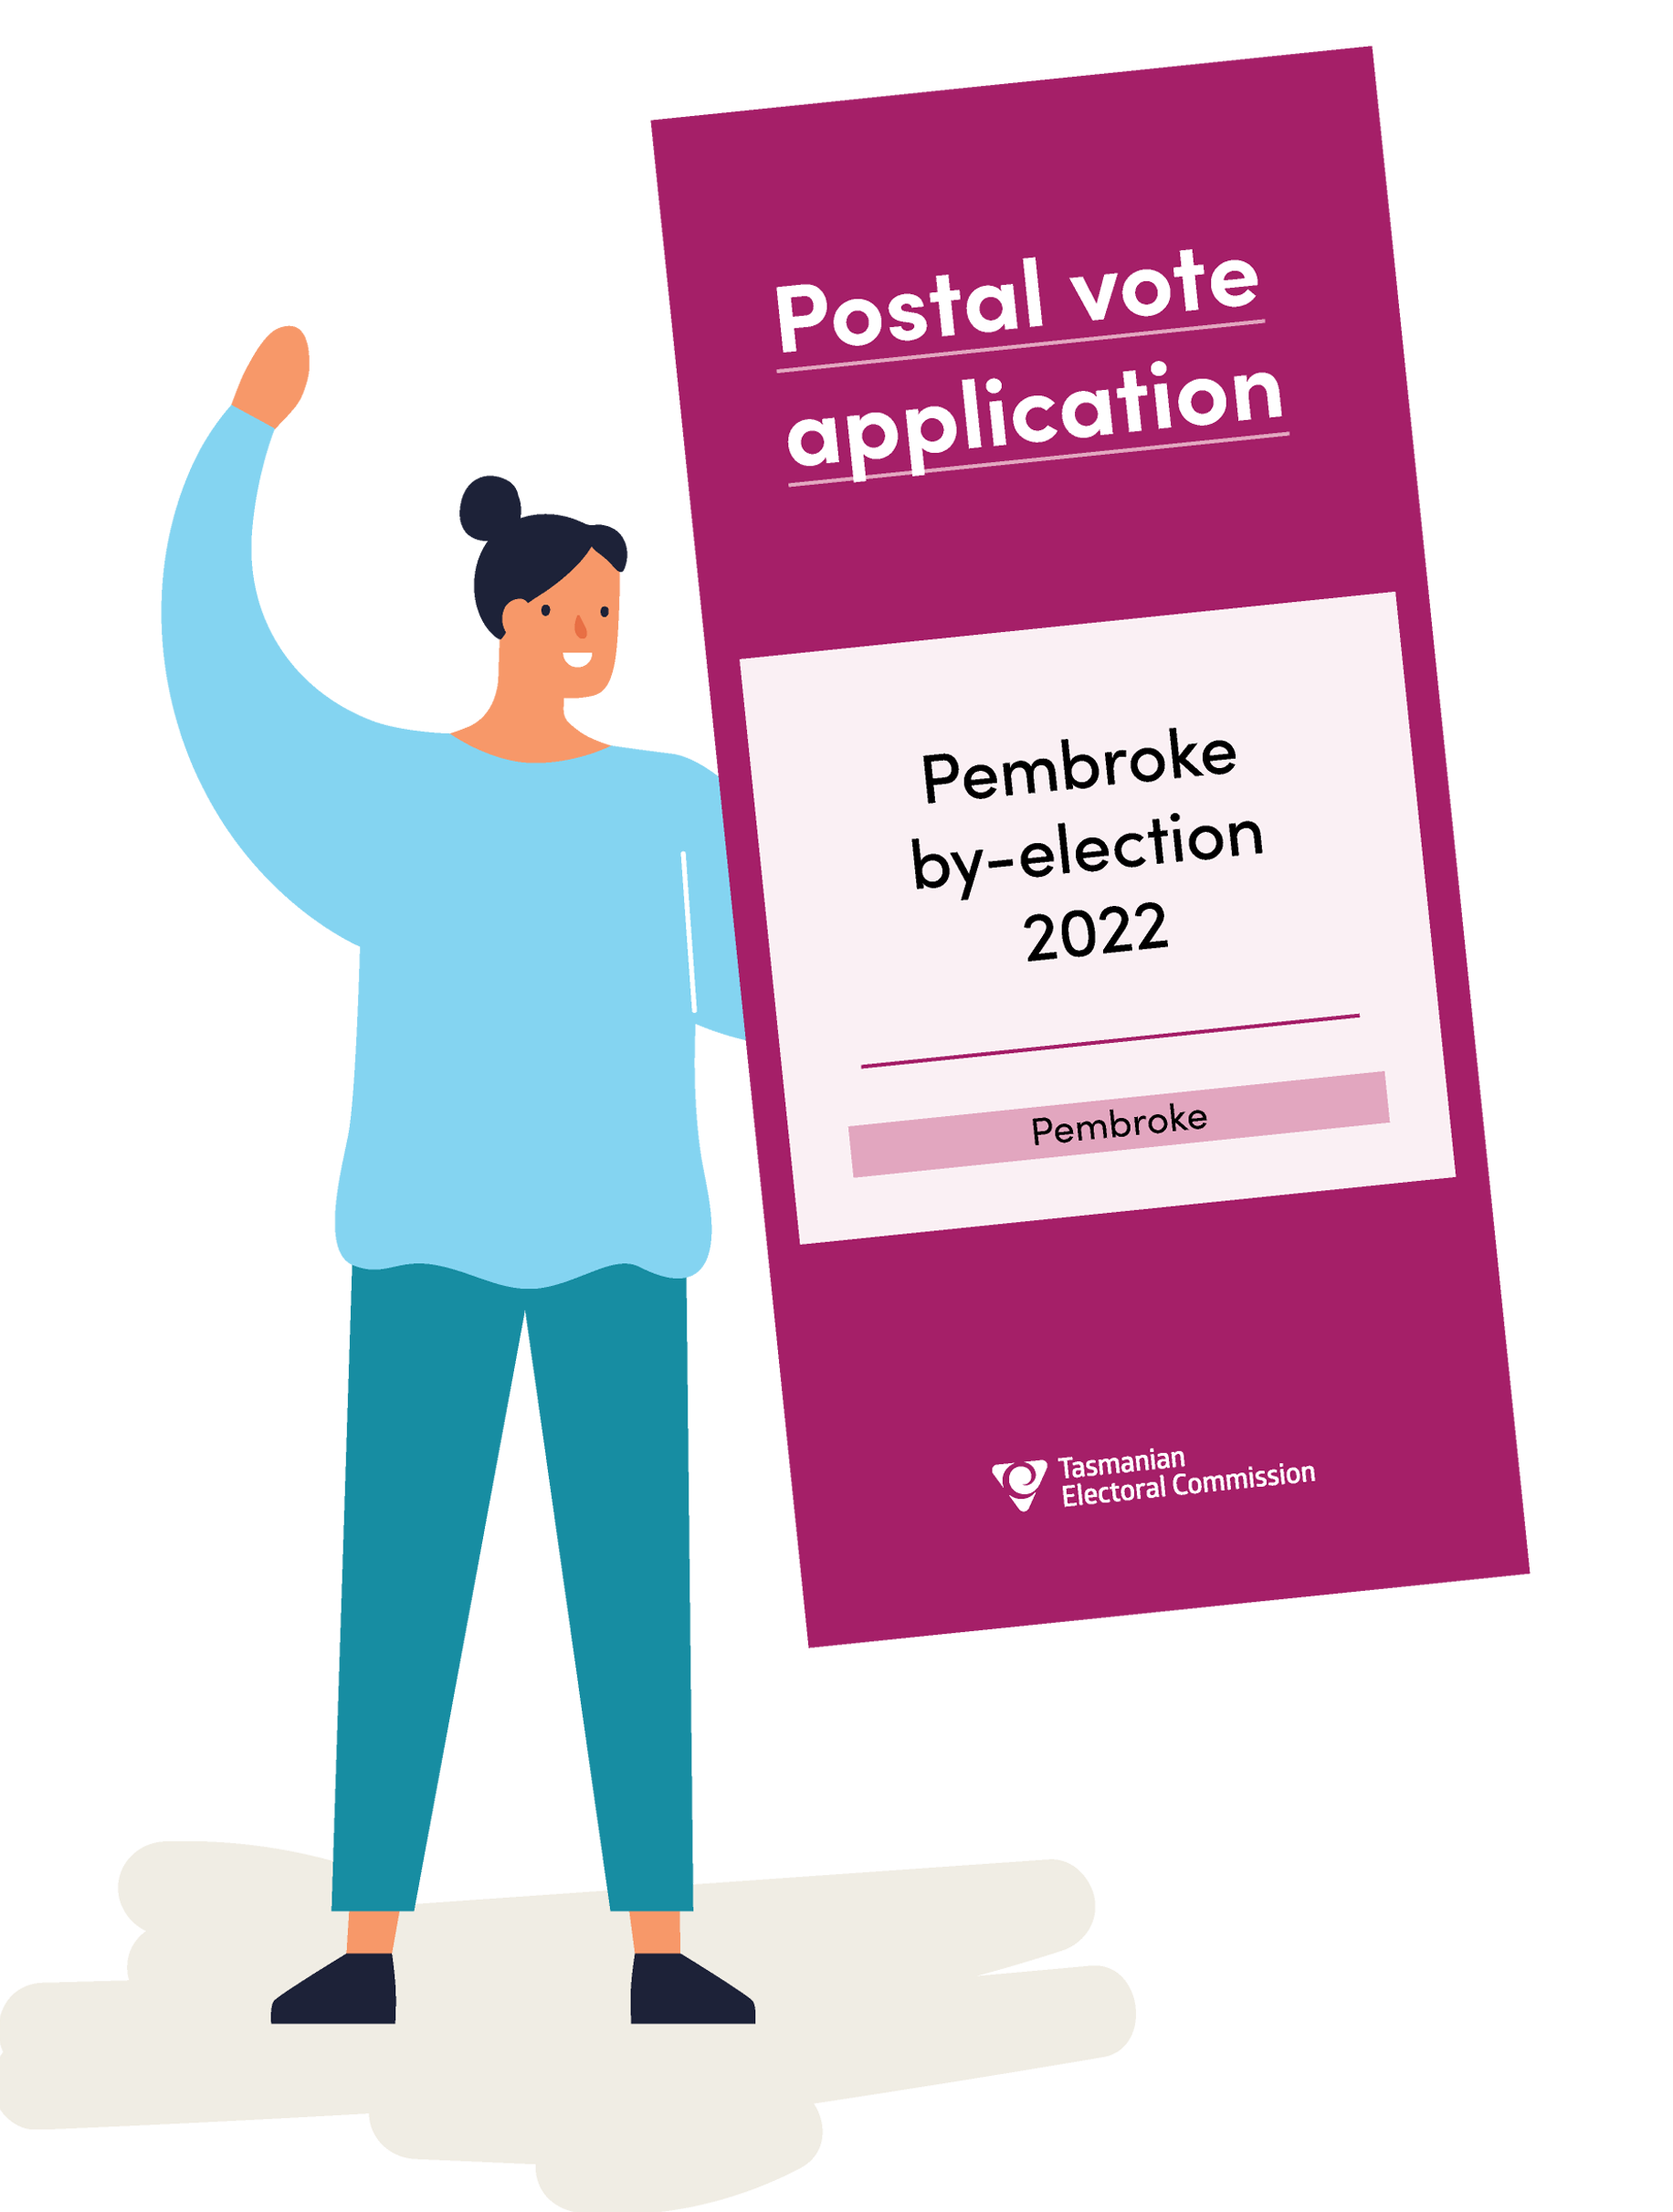 Illustration of person holding postal vote application form